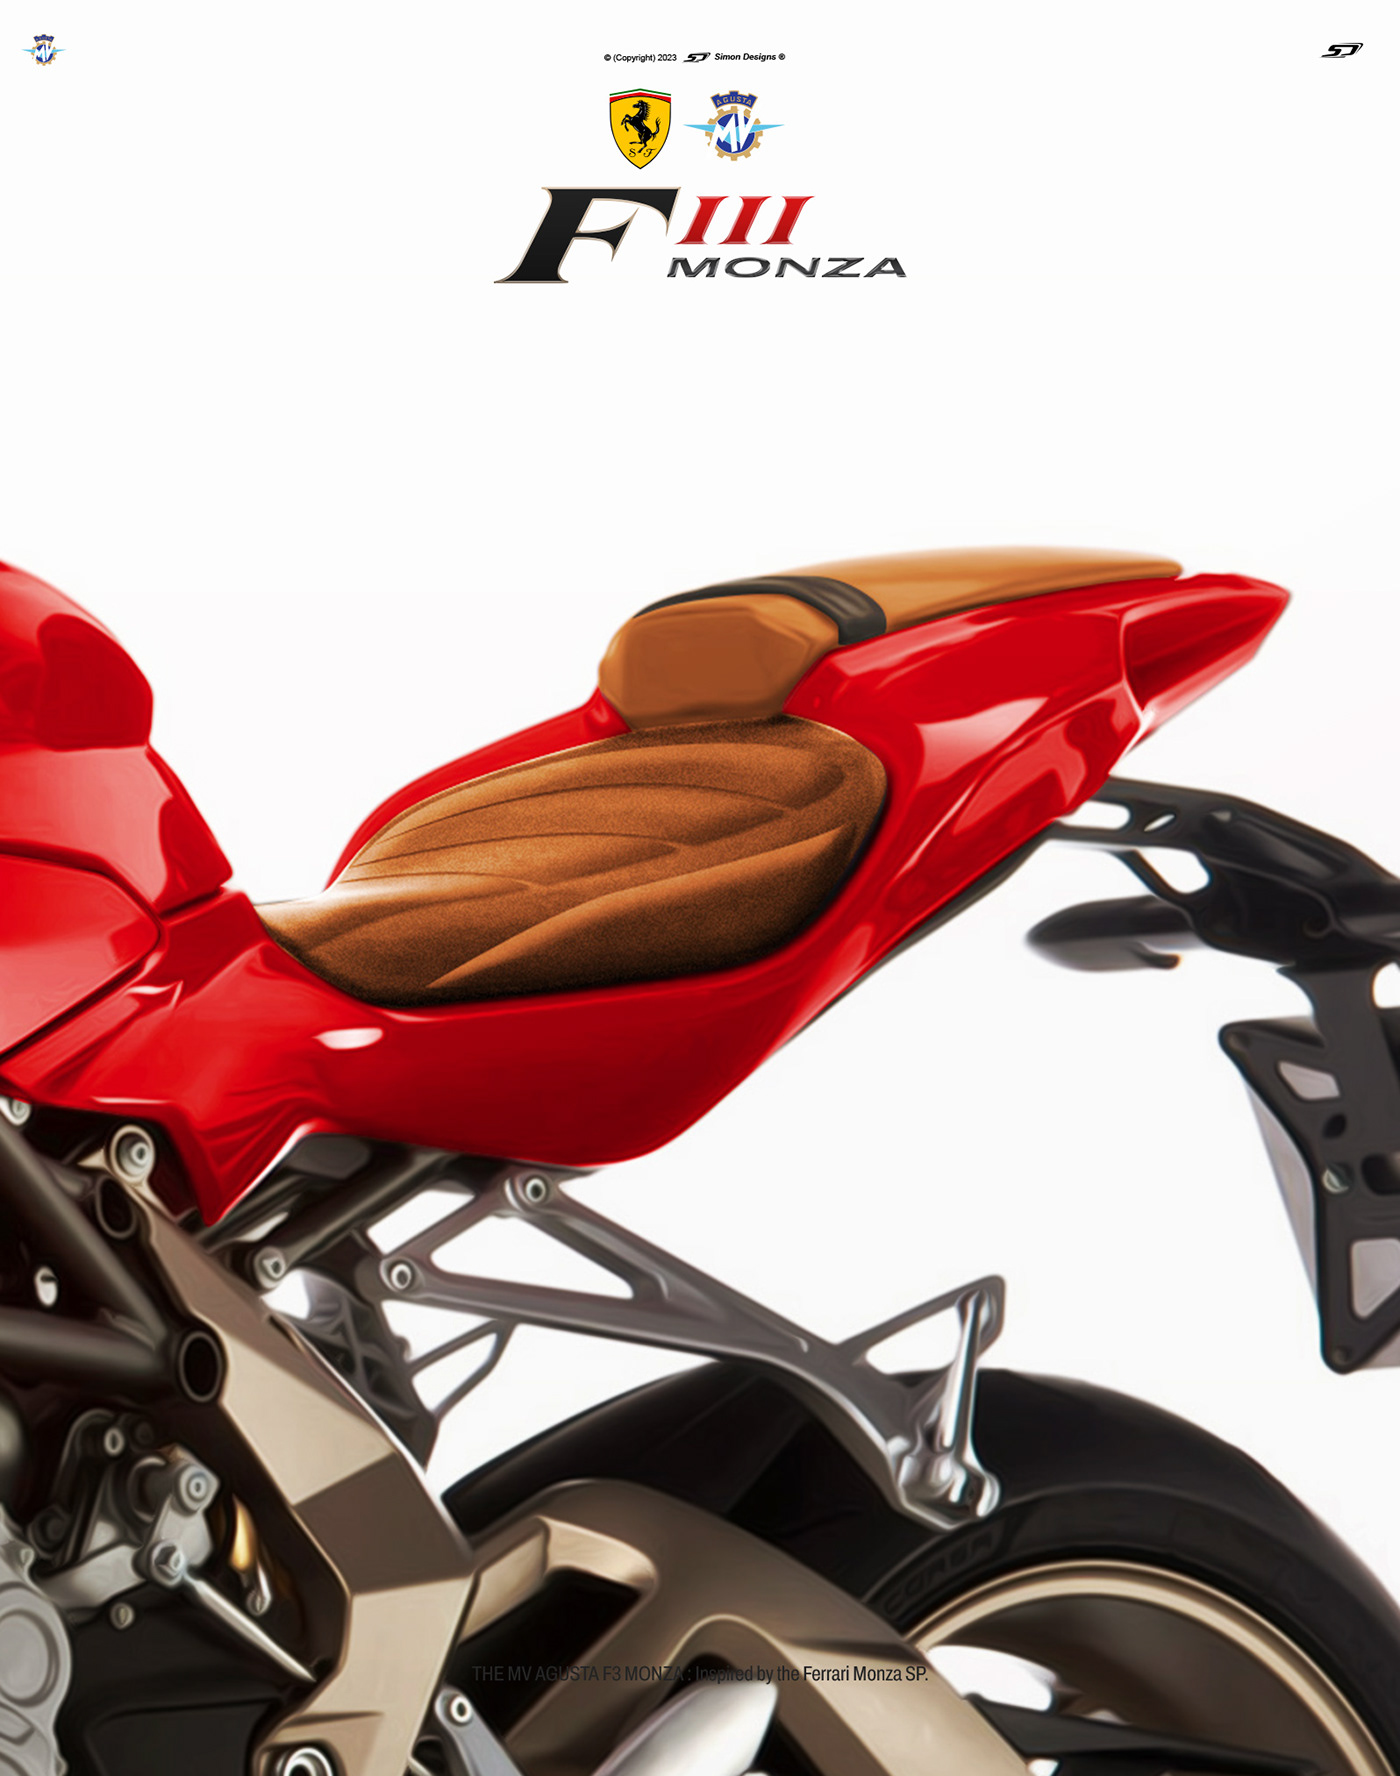 Simon Designs FERRARI designer motorcycle design f3 monza ferrari monza sp ferrari mv ferrari mv agusta MV Agusta F3